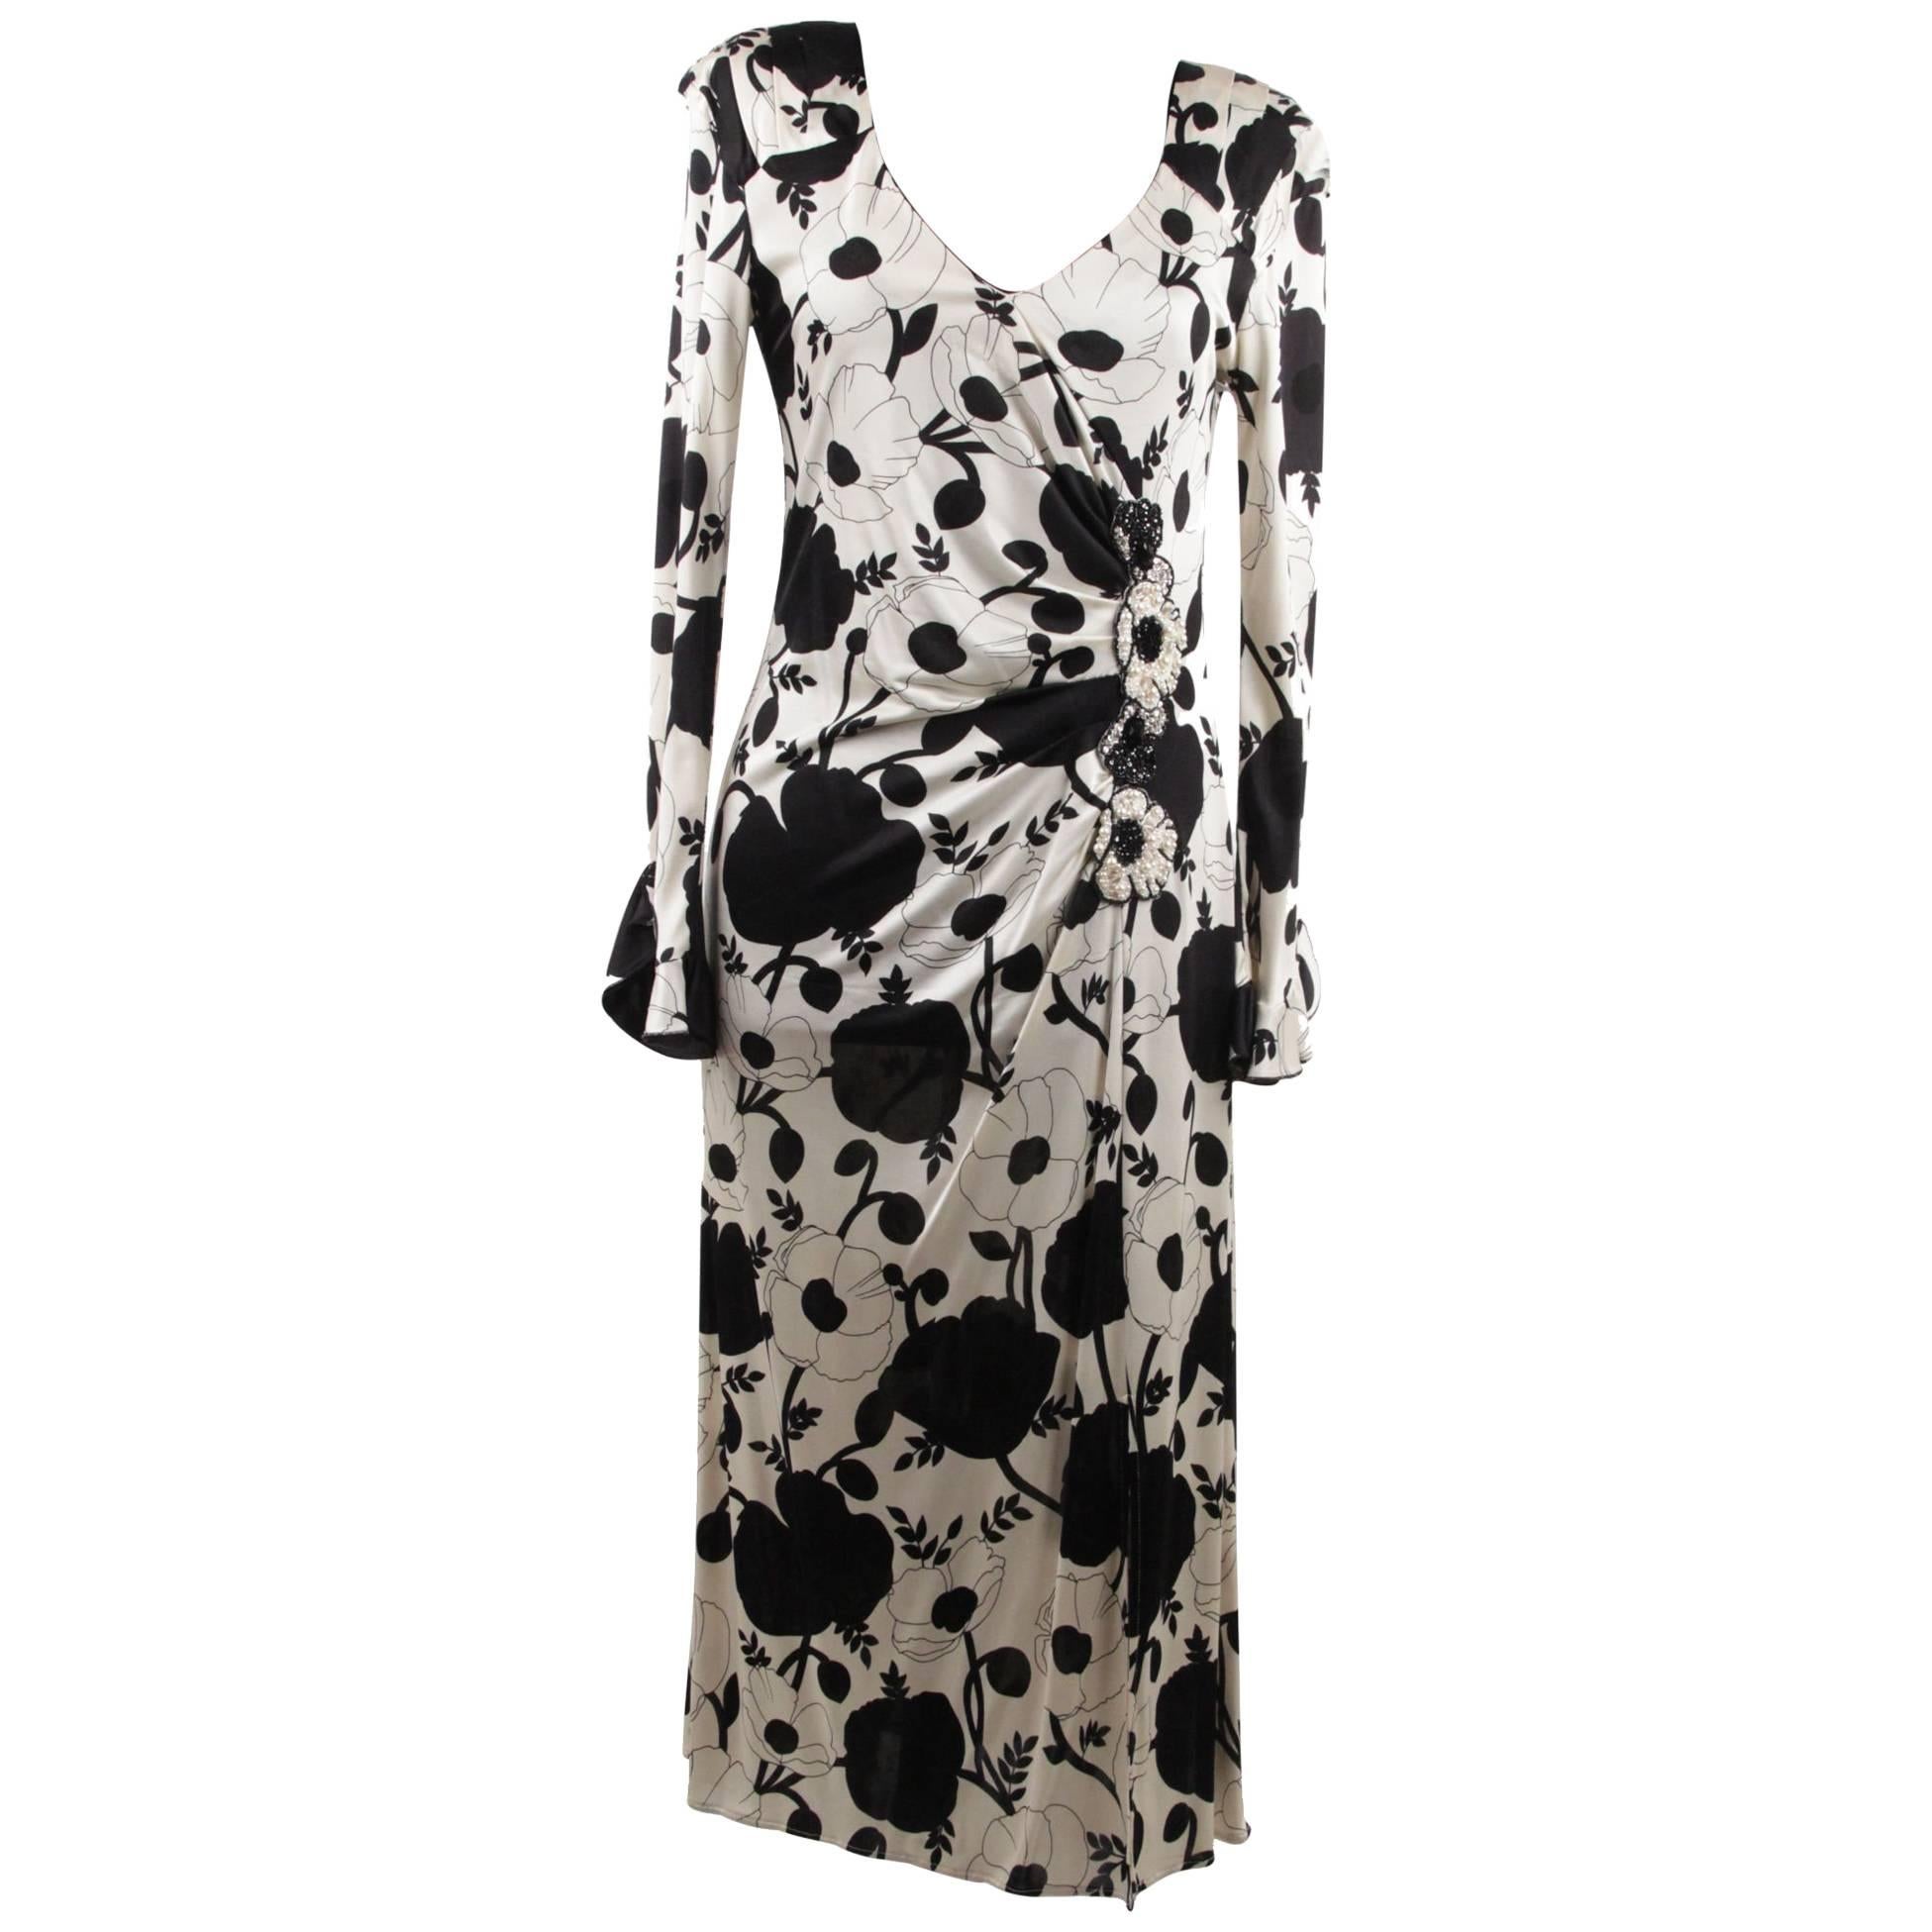 BLUMARINE Black & White Floral SHEATH DRESS Wrap Style w/ Beading